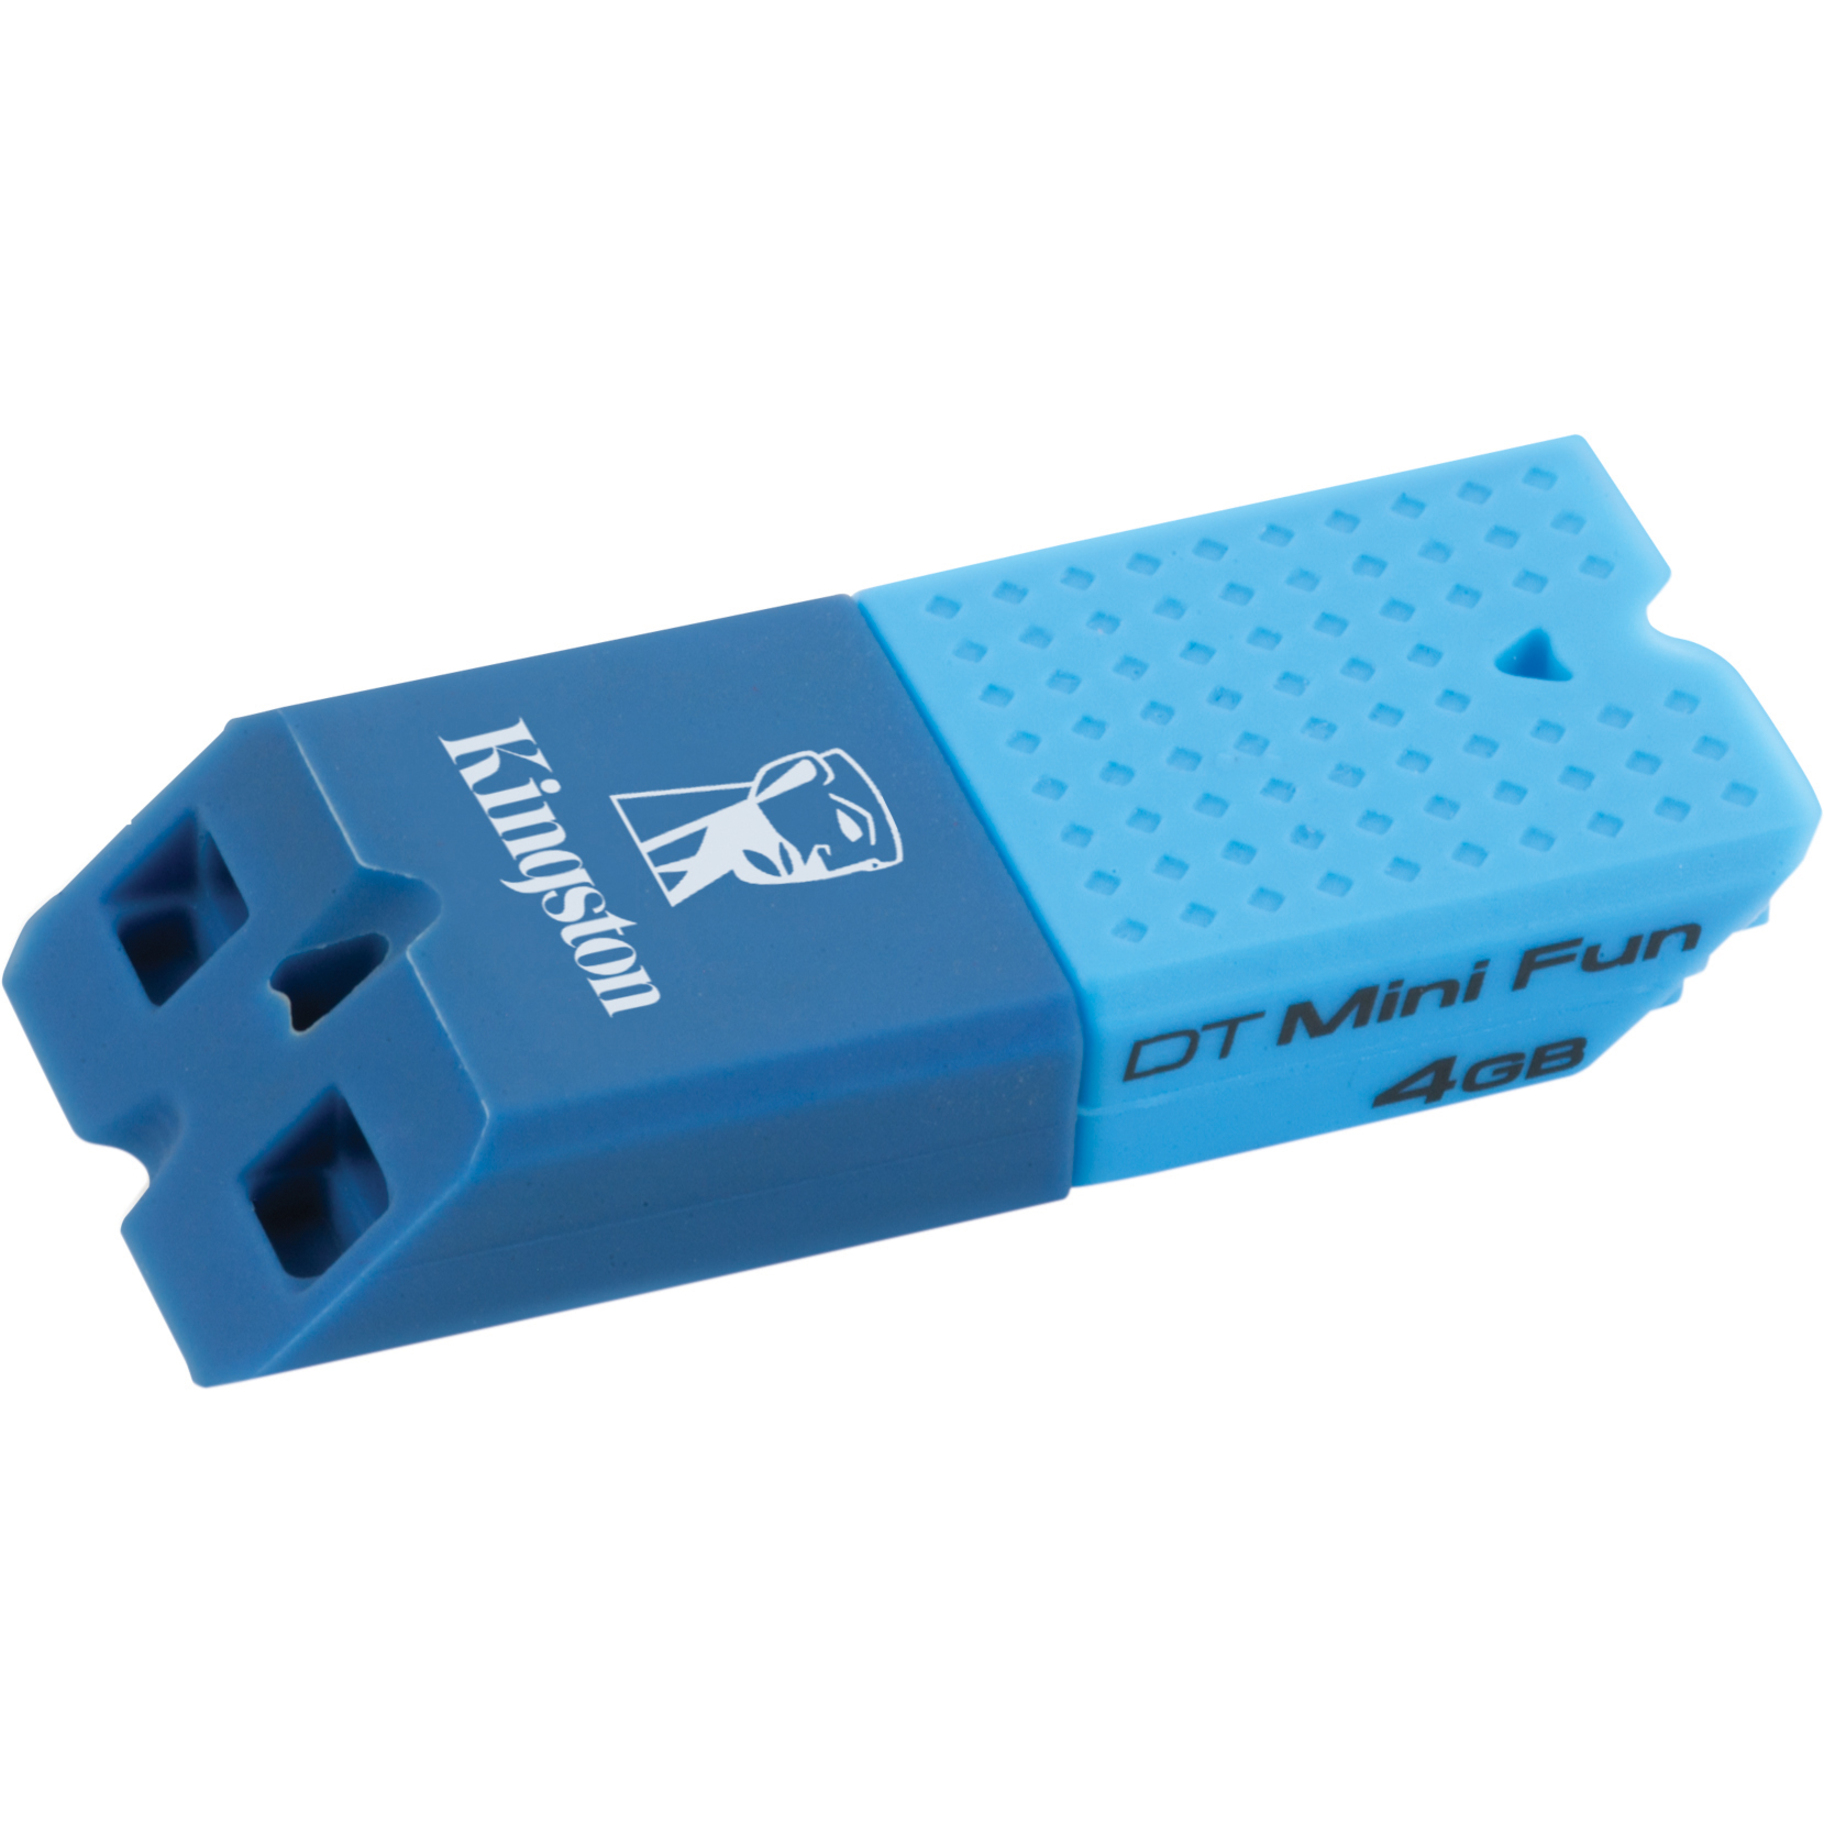 Kingston 4GB DataTraveler Mini Fun G2 USB 2.0 Flash Drive - image 1 of 4